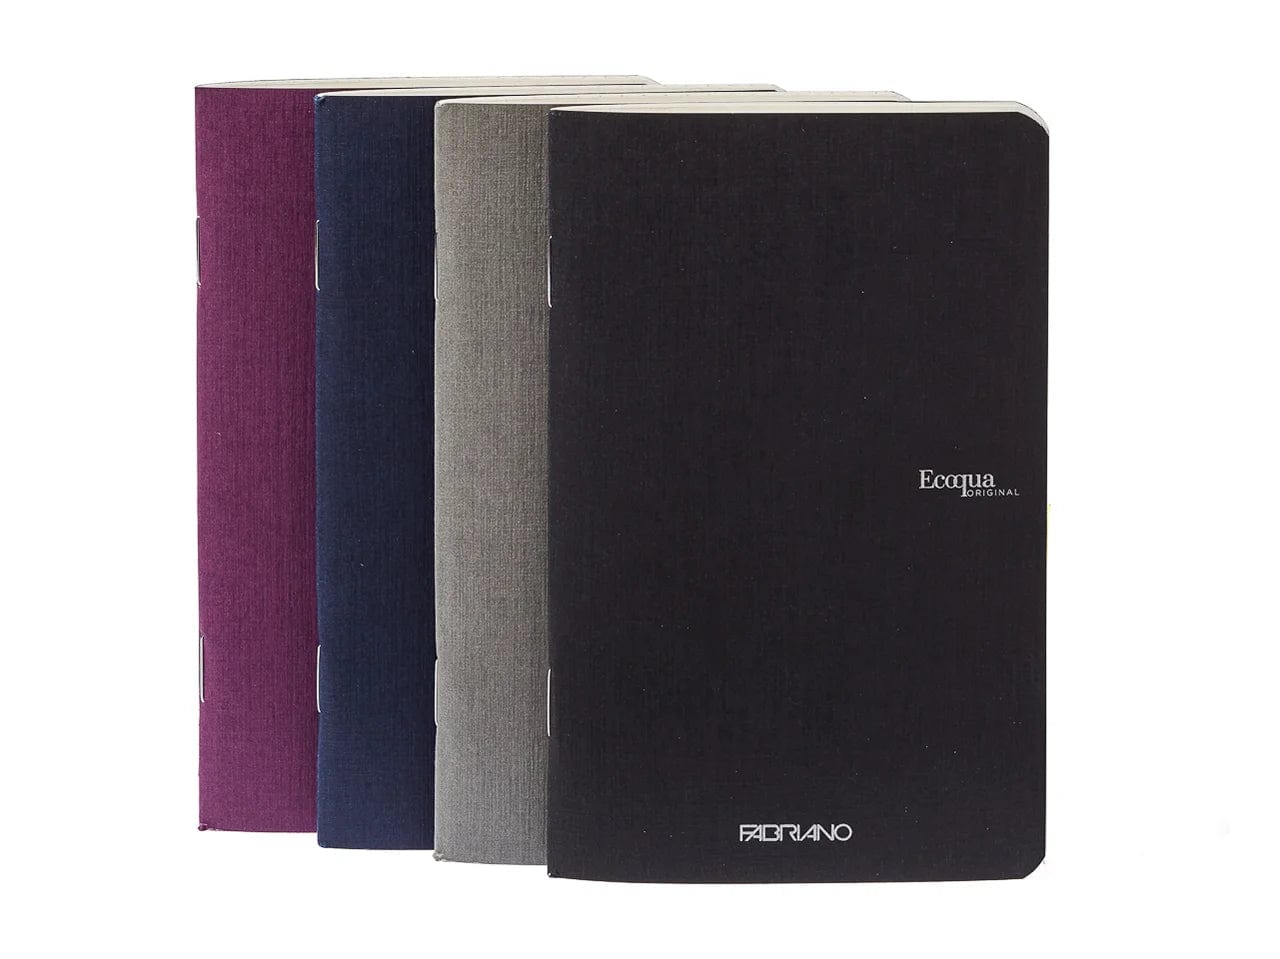 FABRIANO Ecoqua - Pad Set DARK COLOURS Fabriano - EcoQua - Pocket Size Blank Notepads - Sets of 4